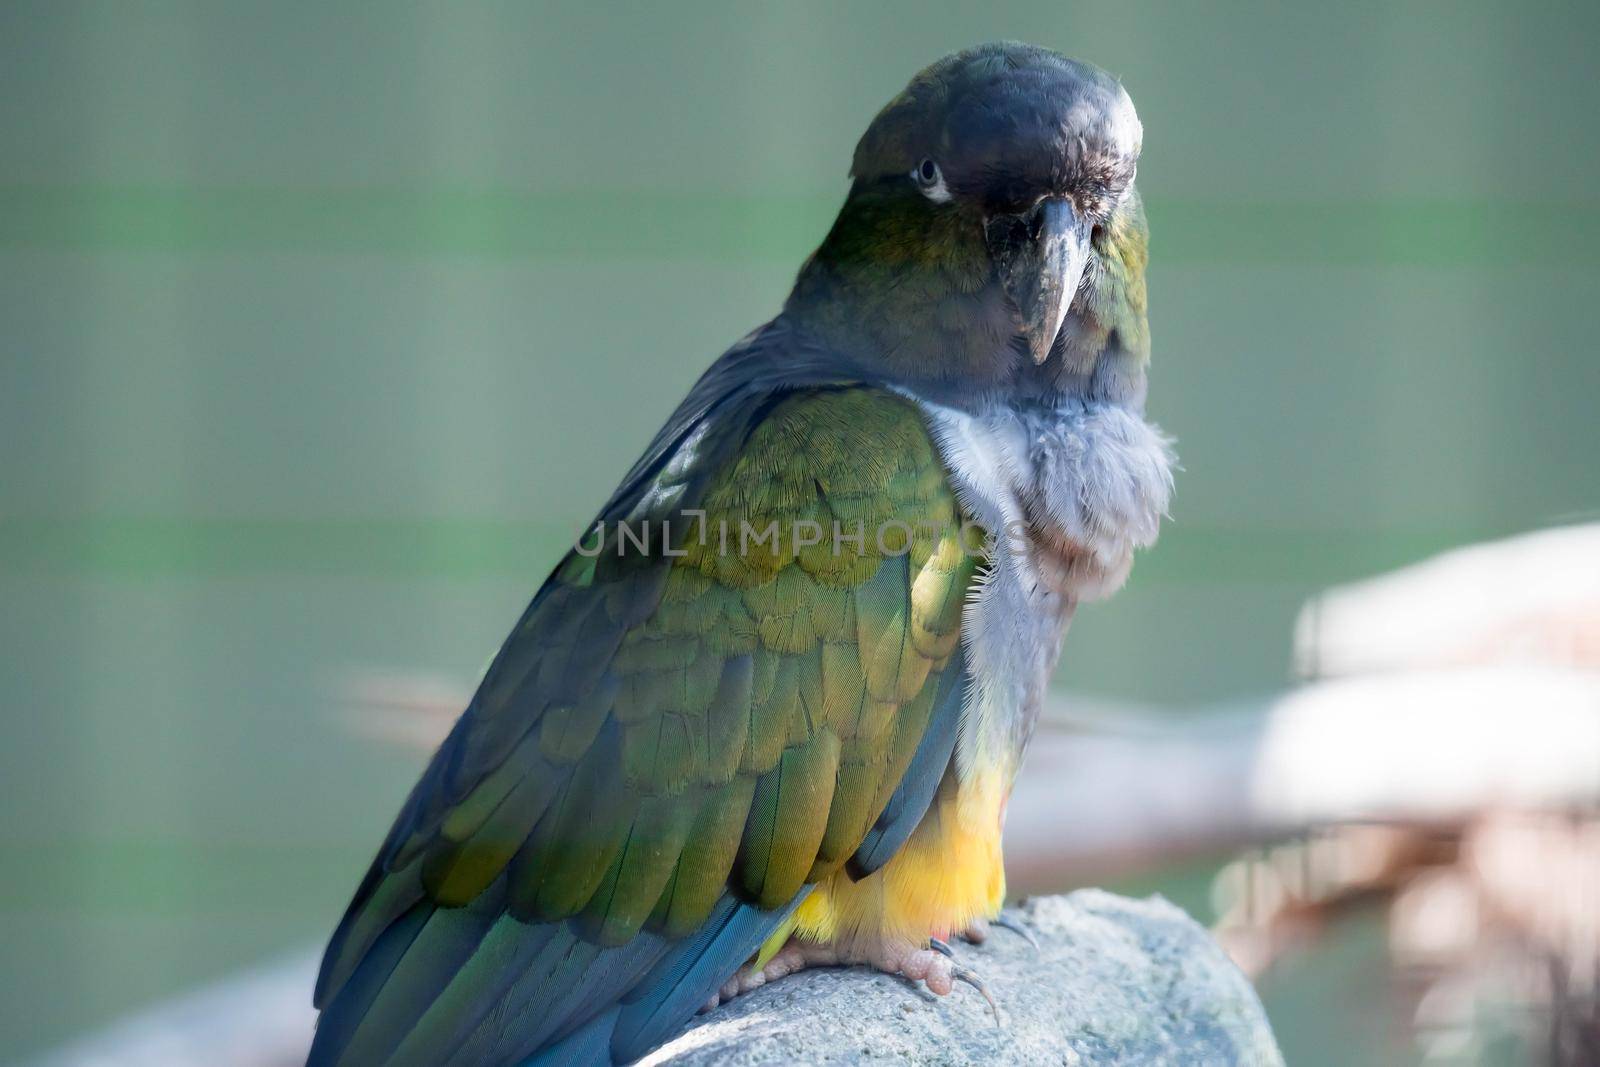 A Burrowing parrot (Cyanoliseus patagonus) or Burrowing parakeet also known as the Patagonian conure, portait.